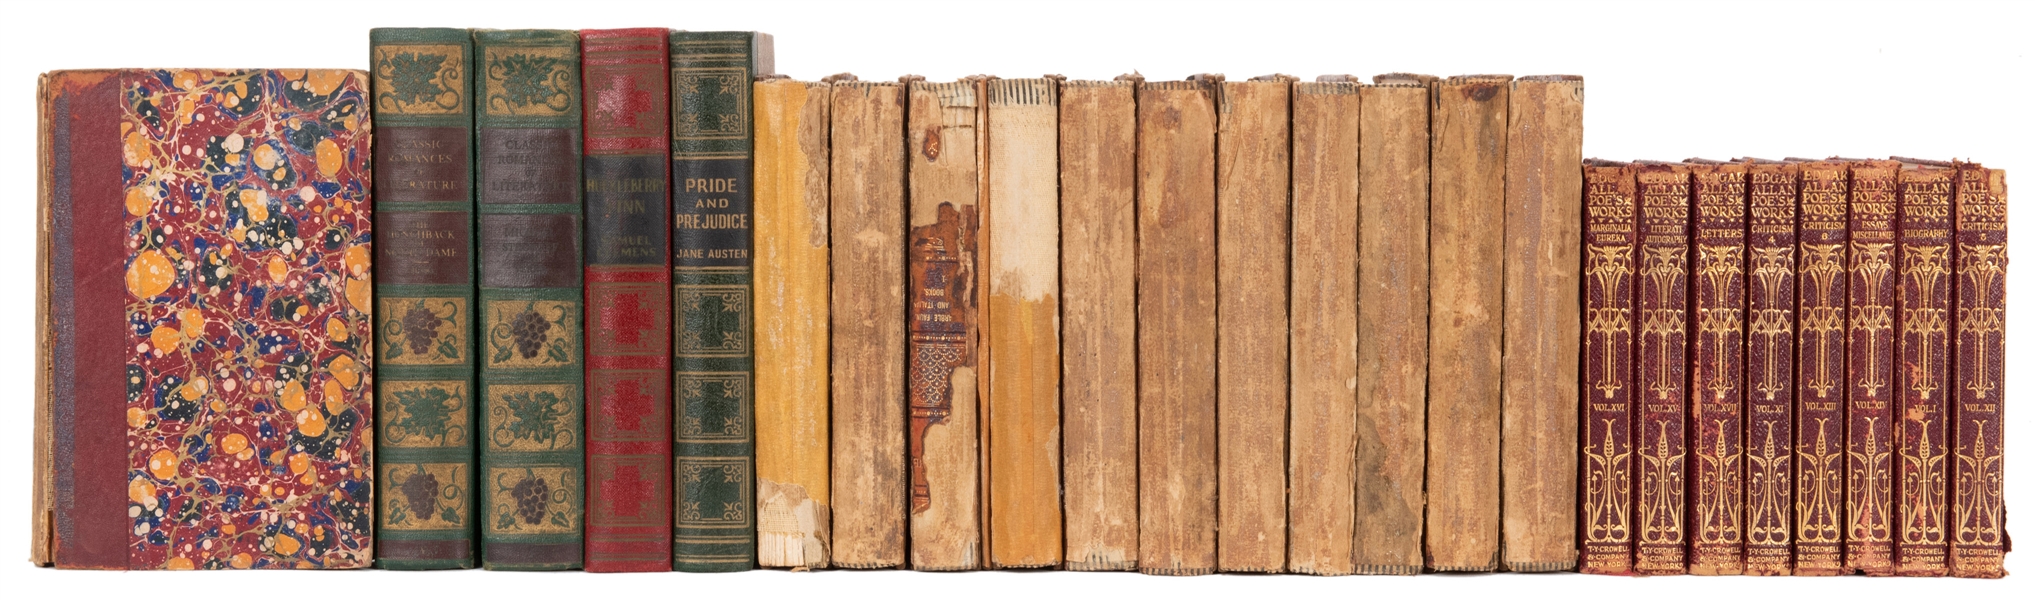 Shelf of Classic Literary Works. 24 volumes.